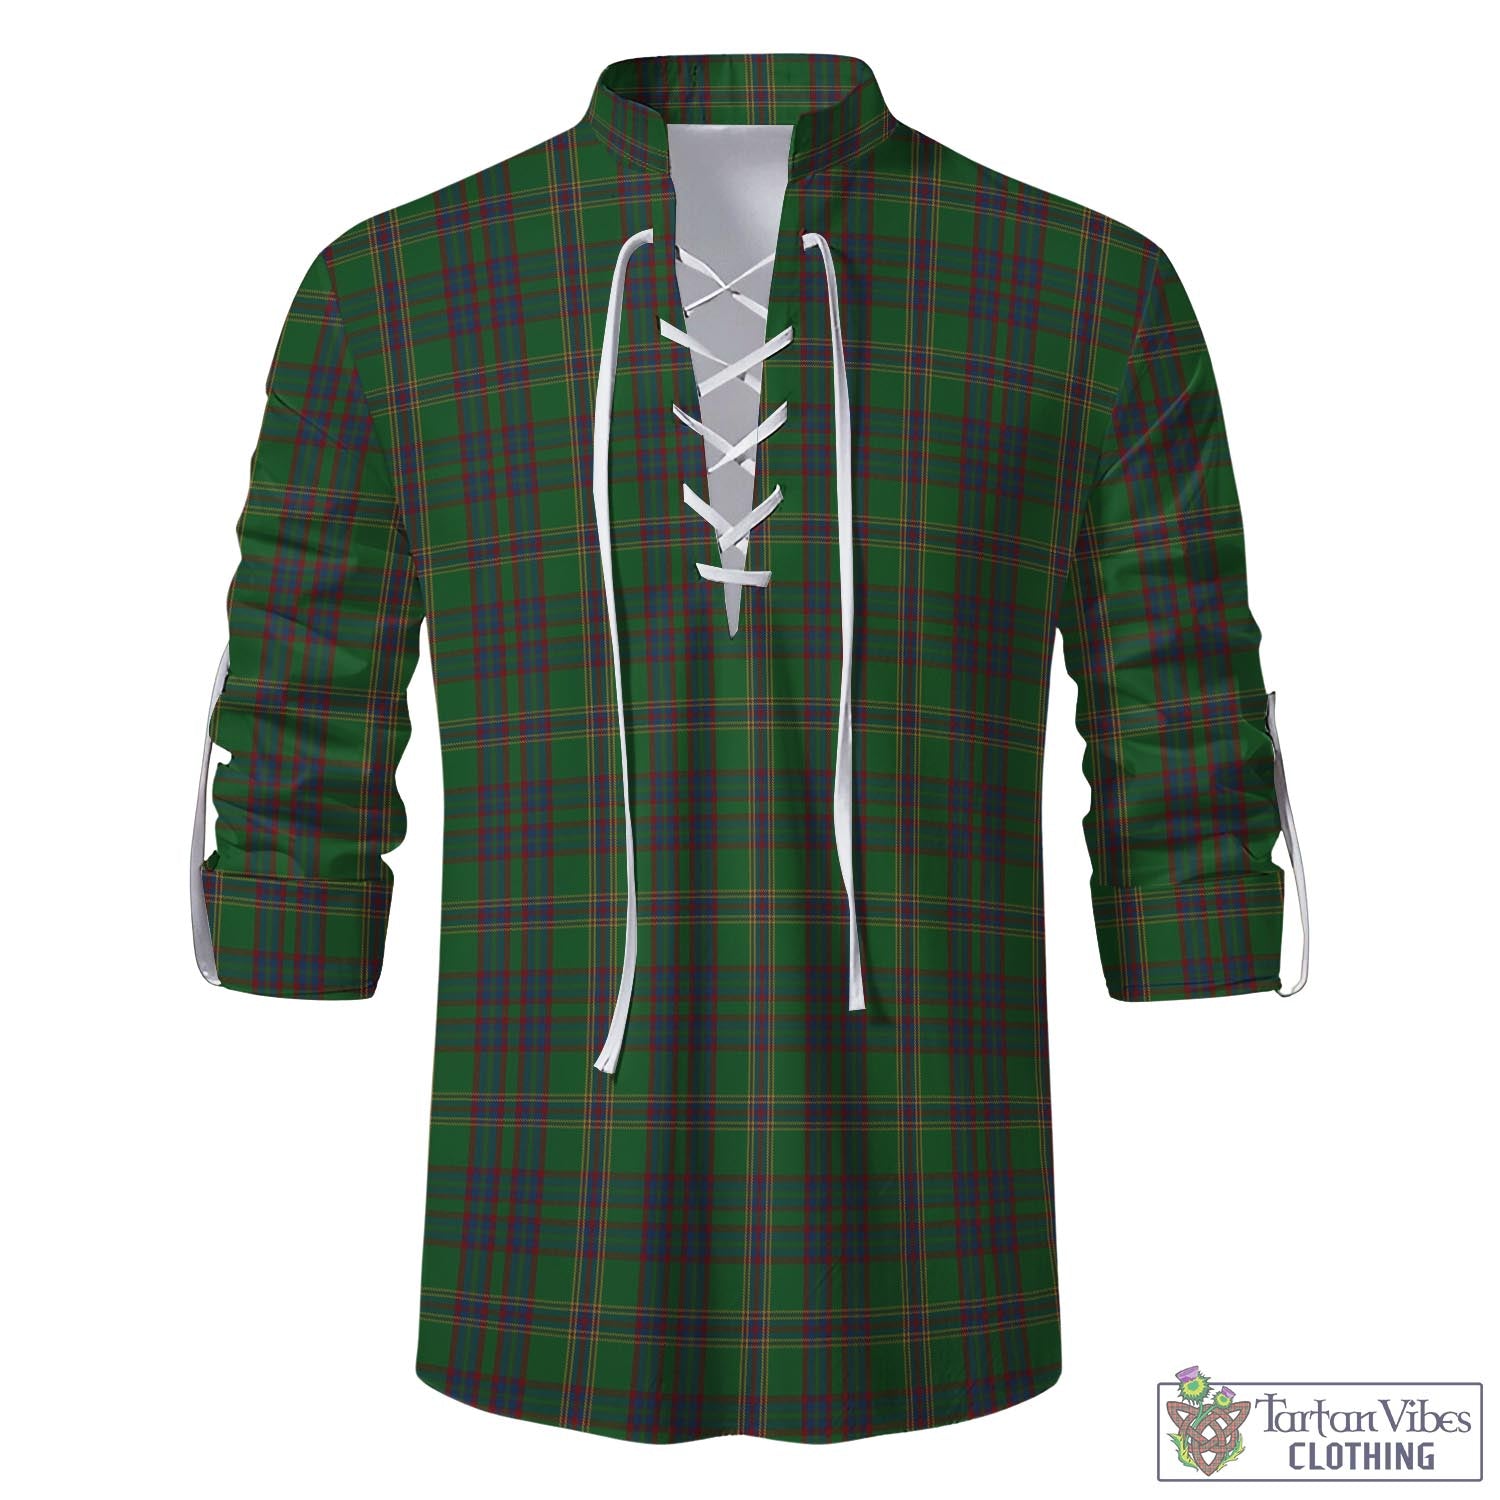 Tartan Vibes Clothing Westmeath County Ireland Tartan Men's Scottish Traditional Jacobite Ghillie Kilt Shirt